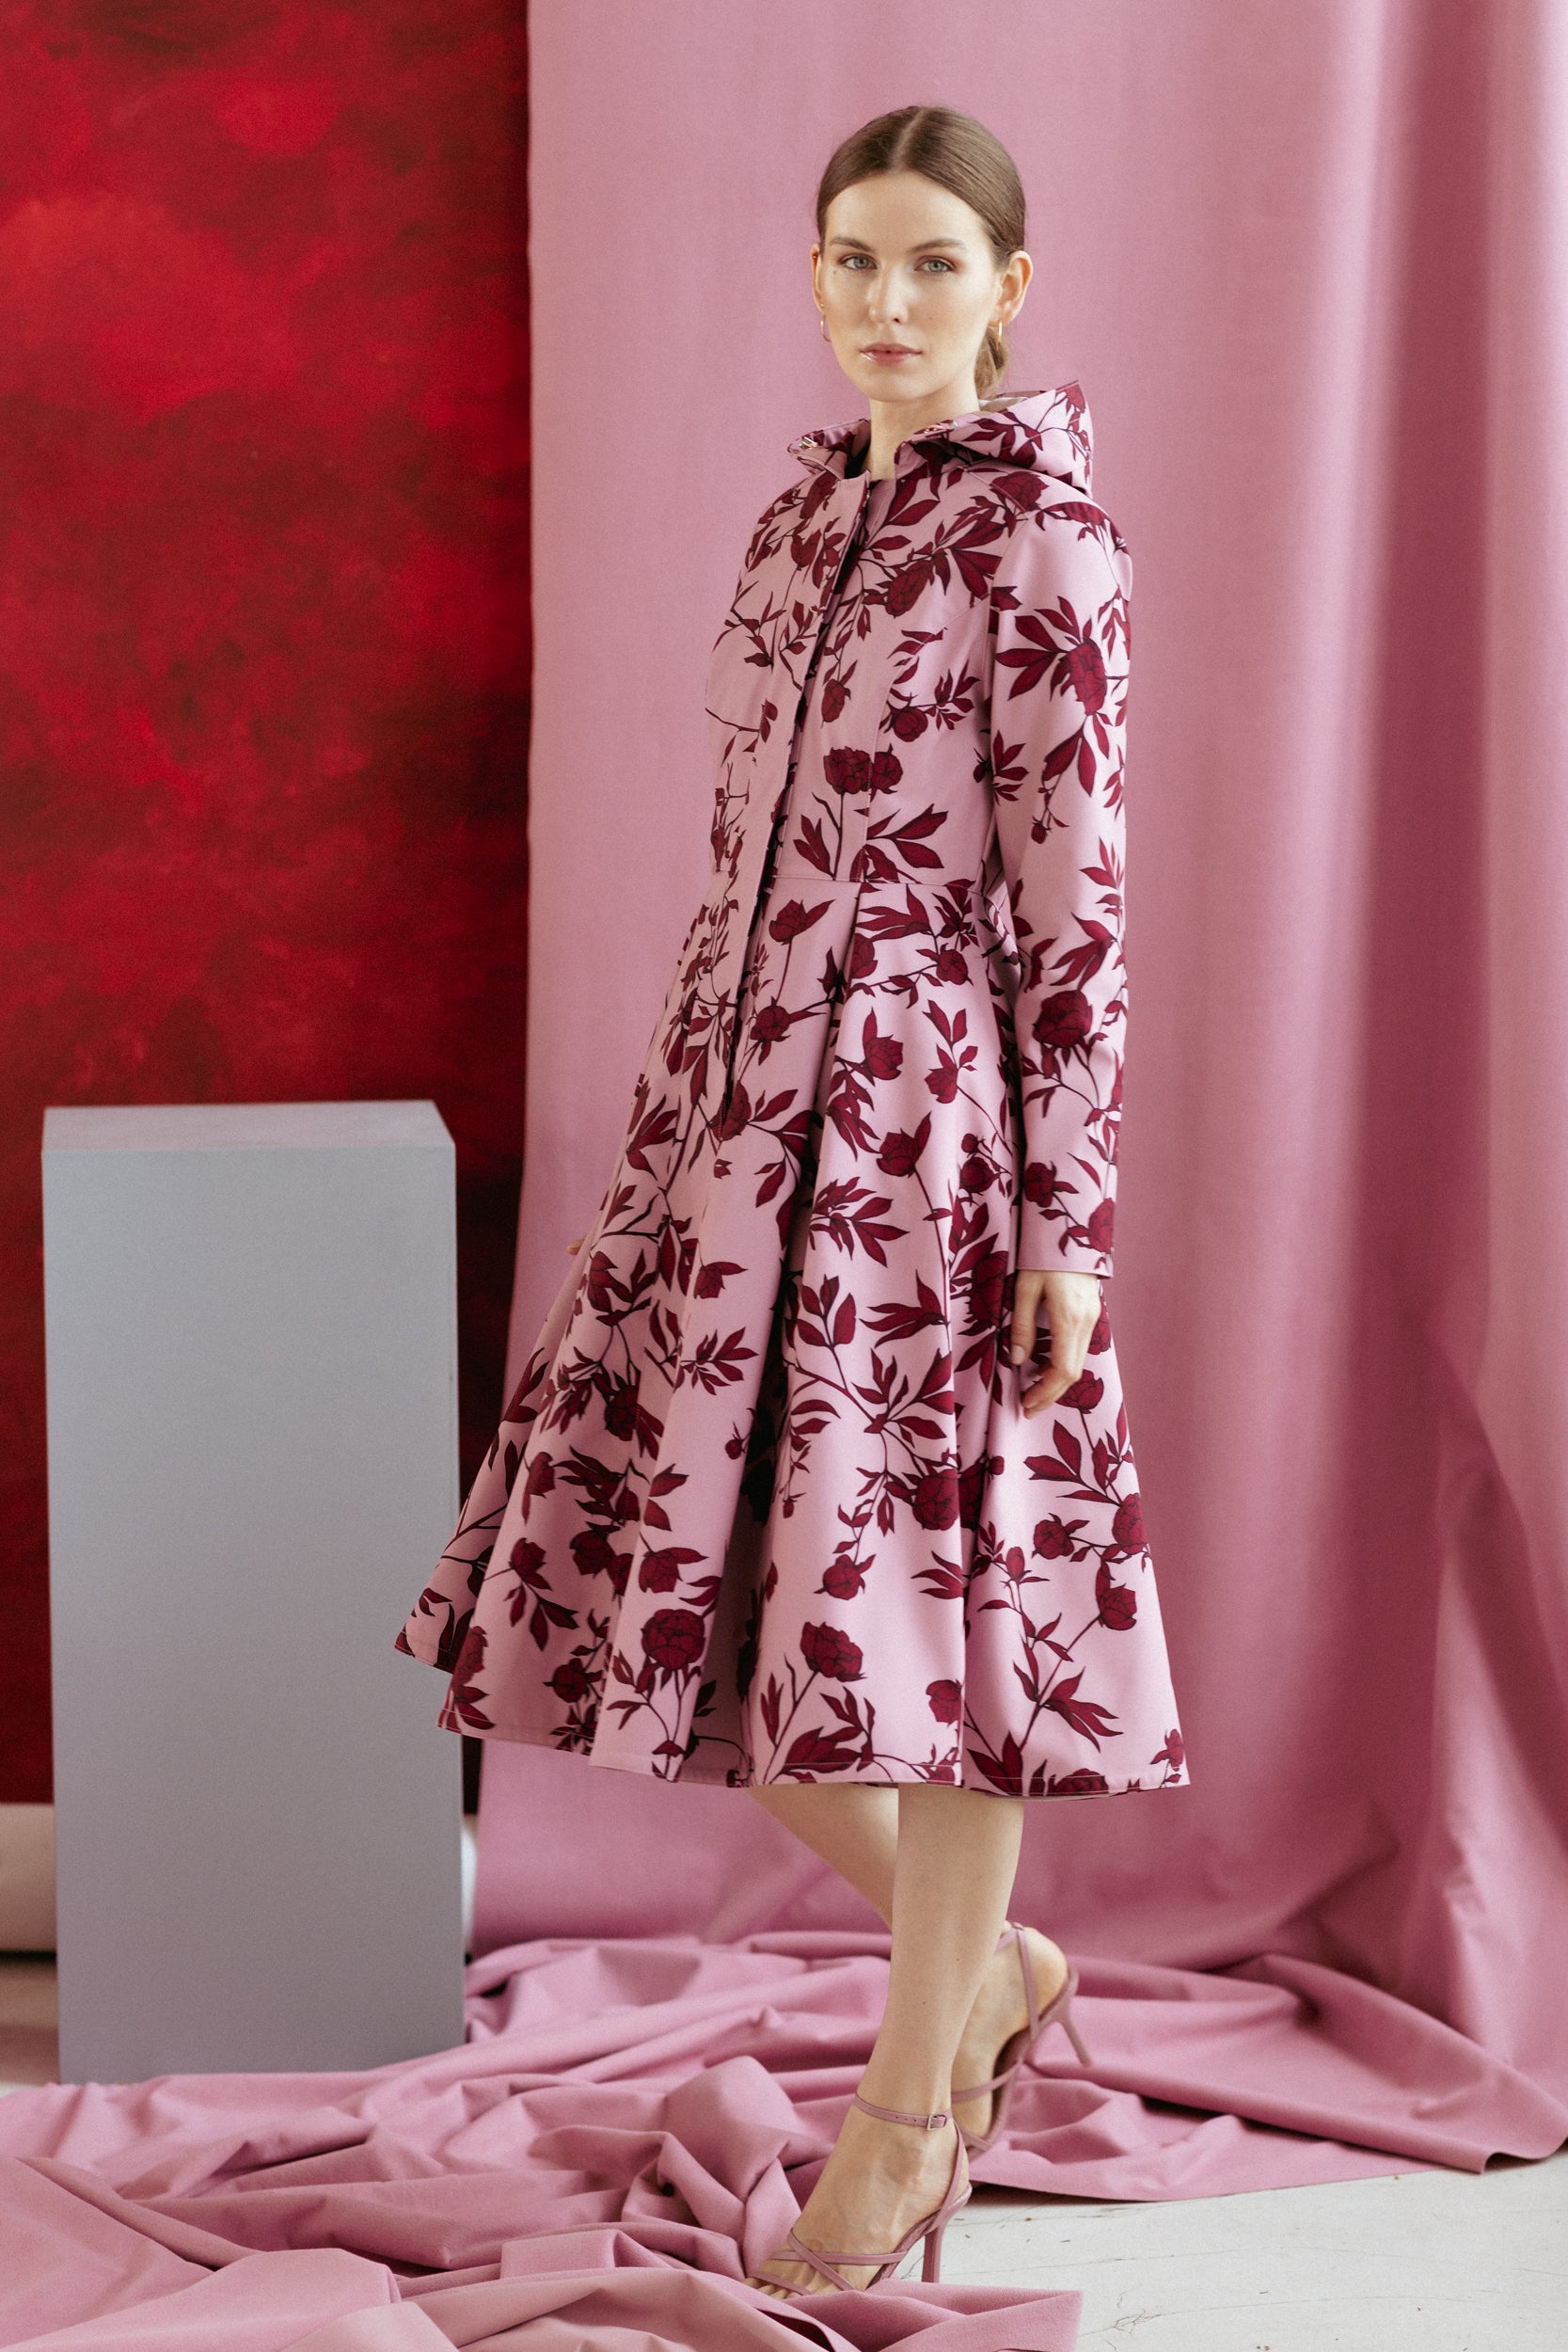 Waterproof Long Pink Coat with Hood and burgundy coloured peony flower print